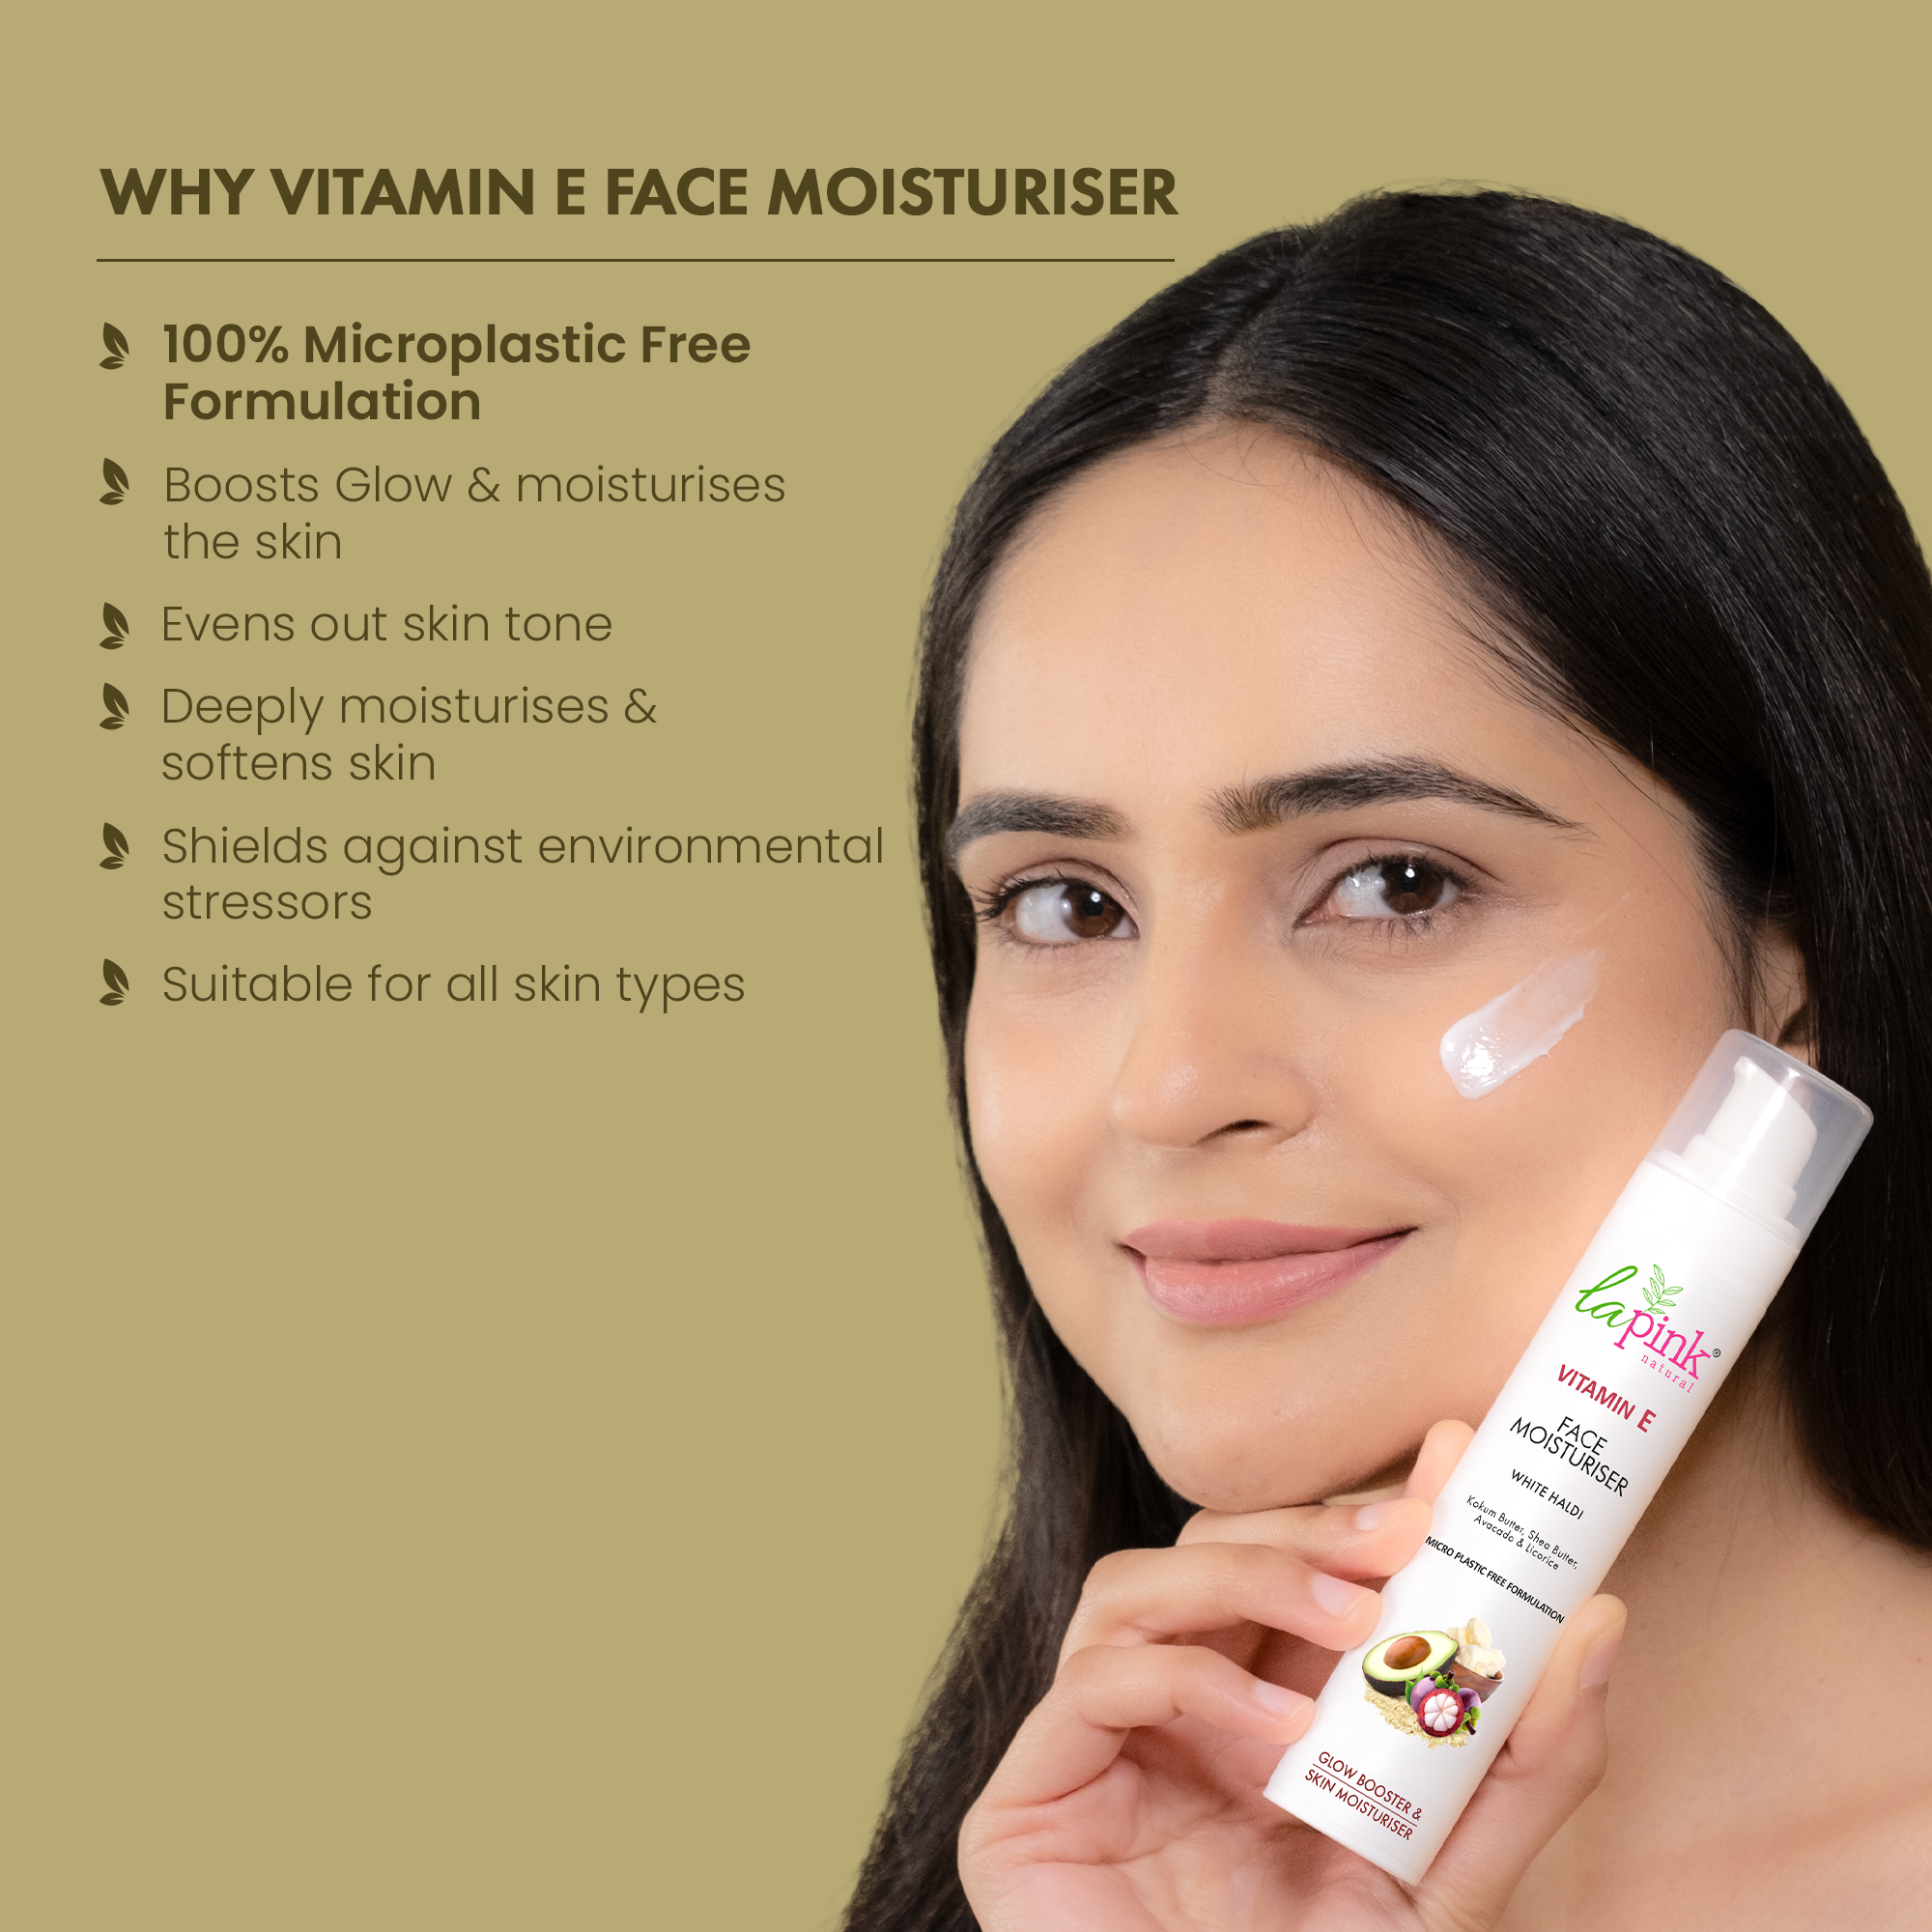 Vitamin E Face Moisturiser with White Haldi for Glow &amp; Moisturization